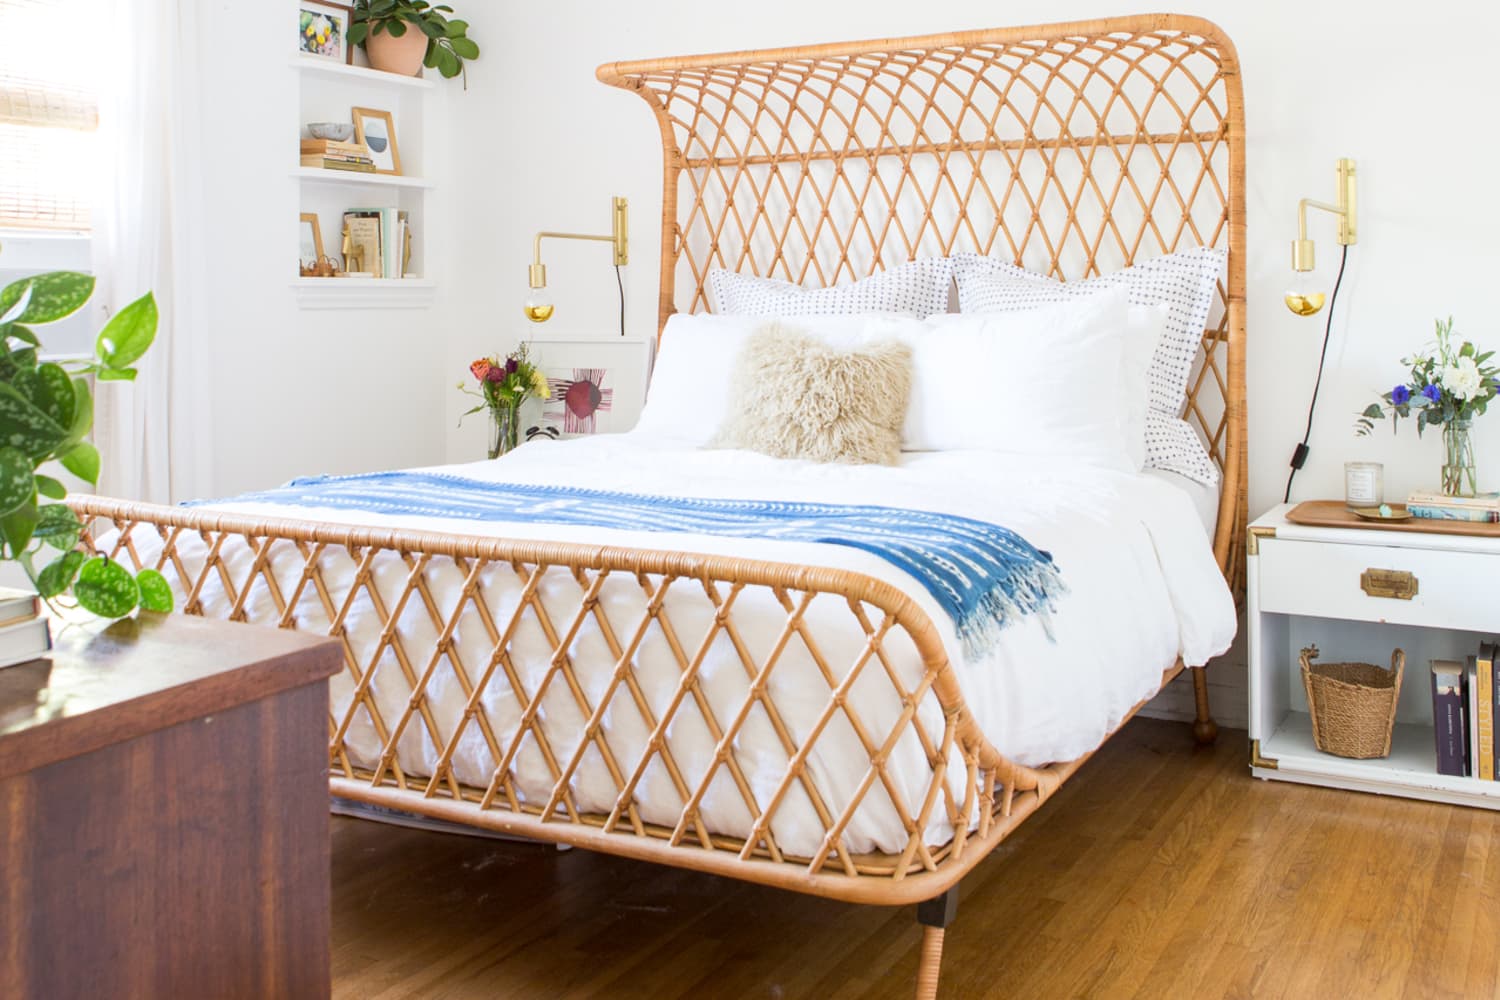 conforma care sleep therapy mattress